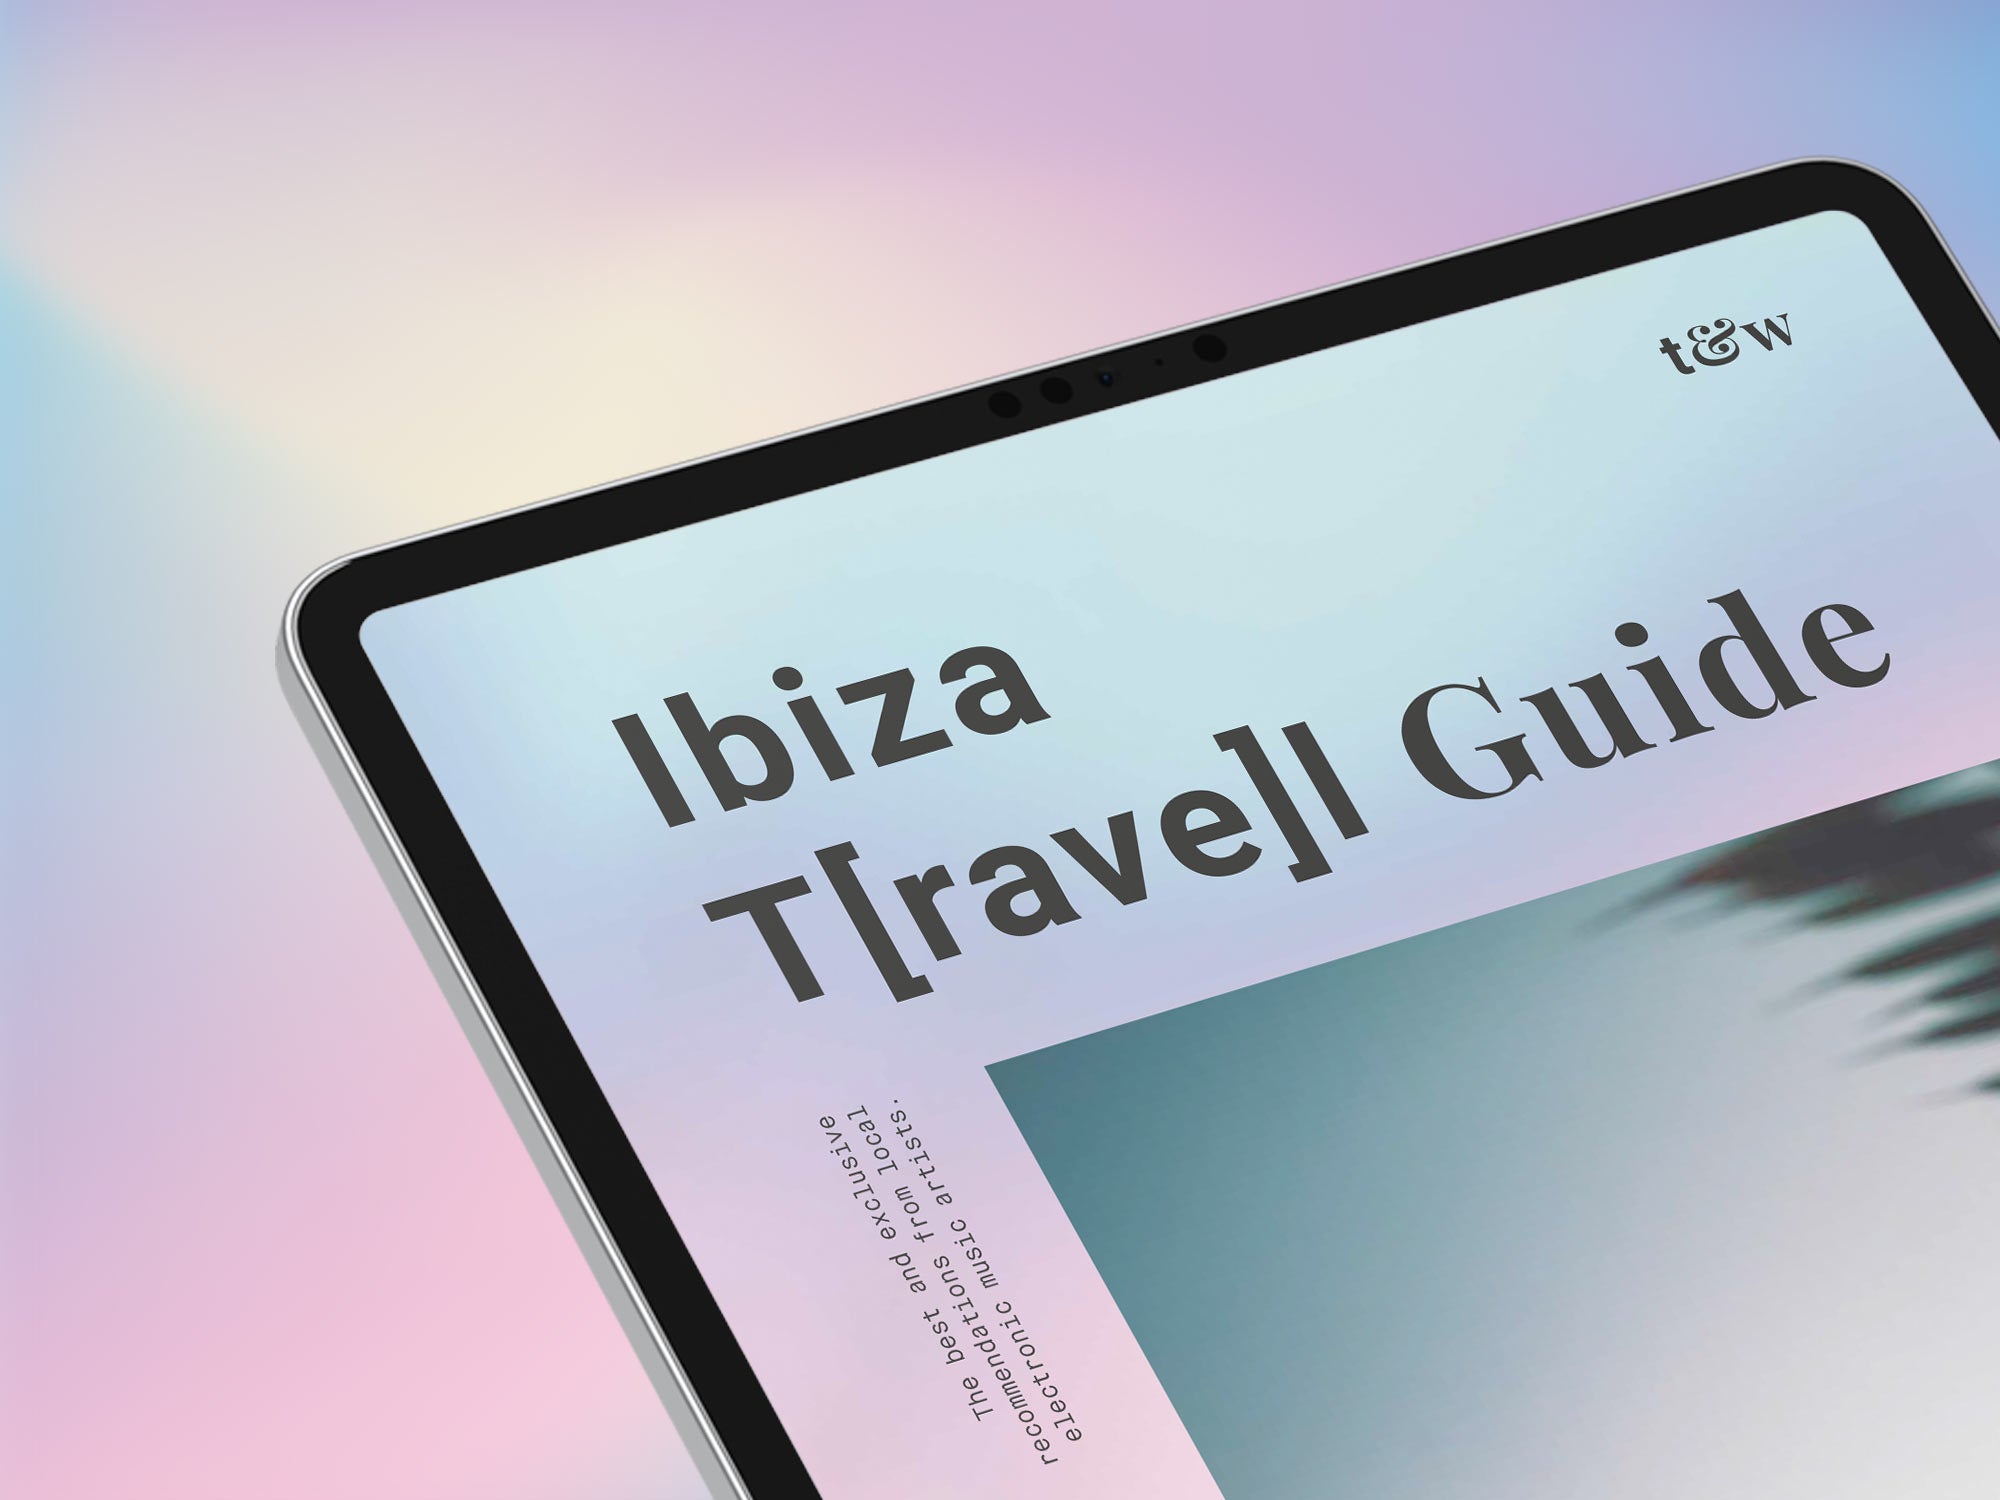 Ibiza T[rave]l Guide – digital